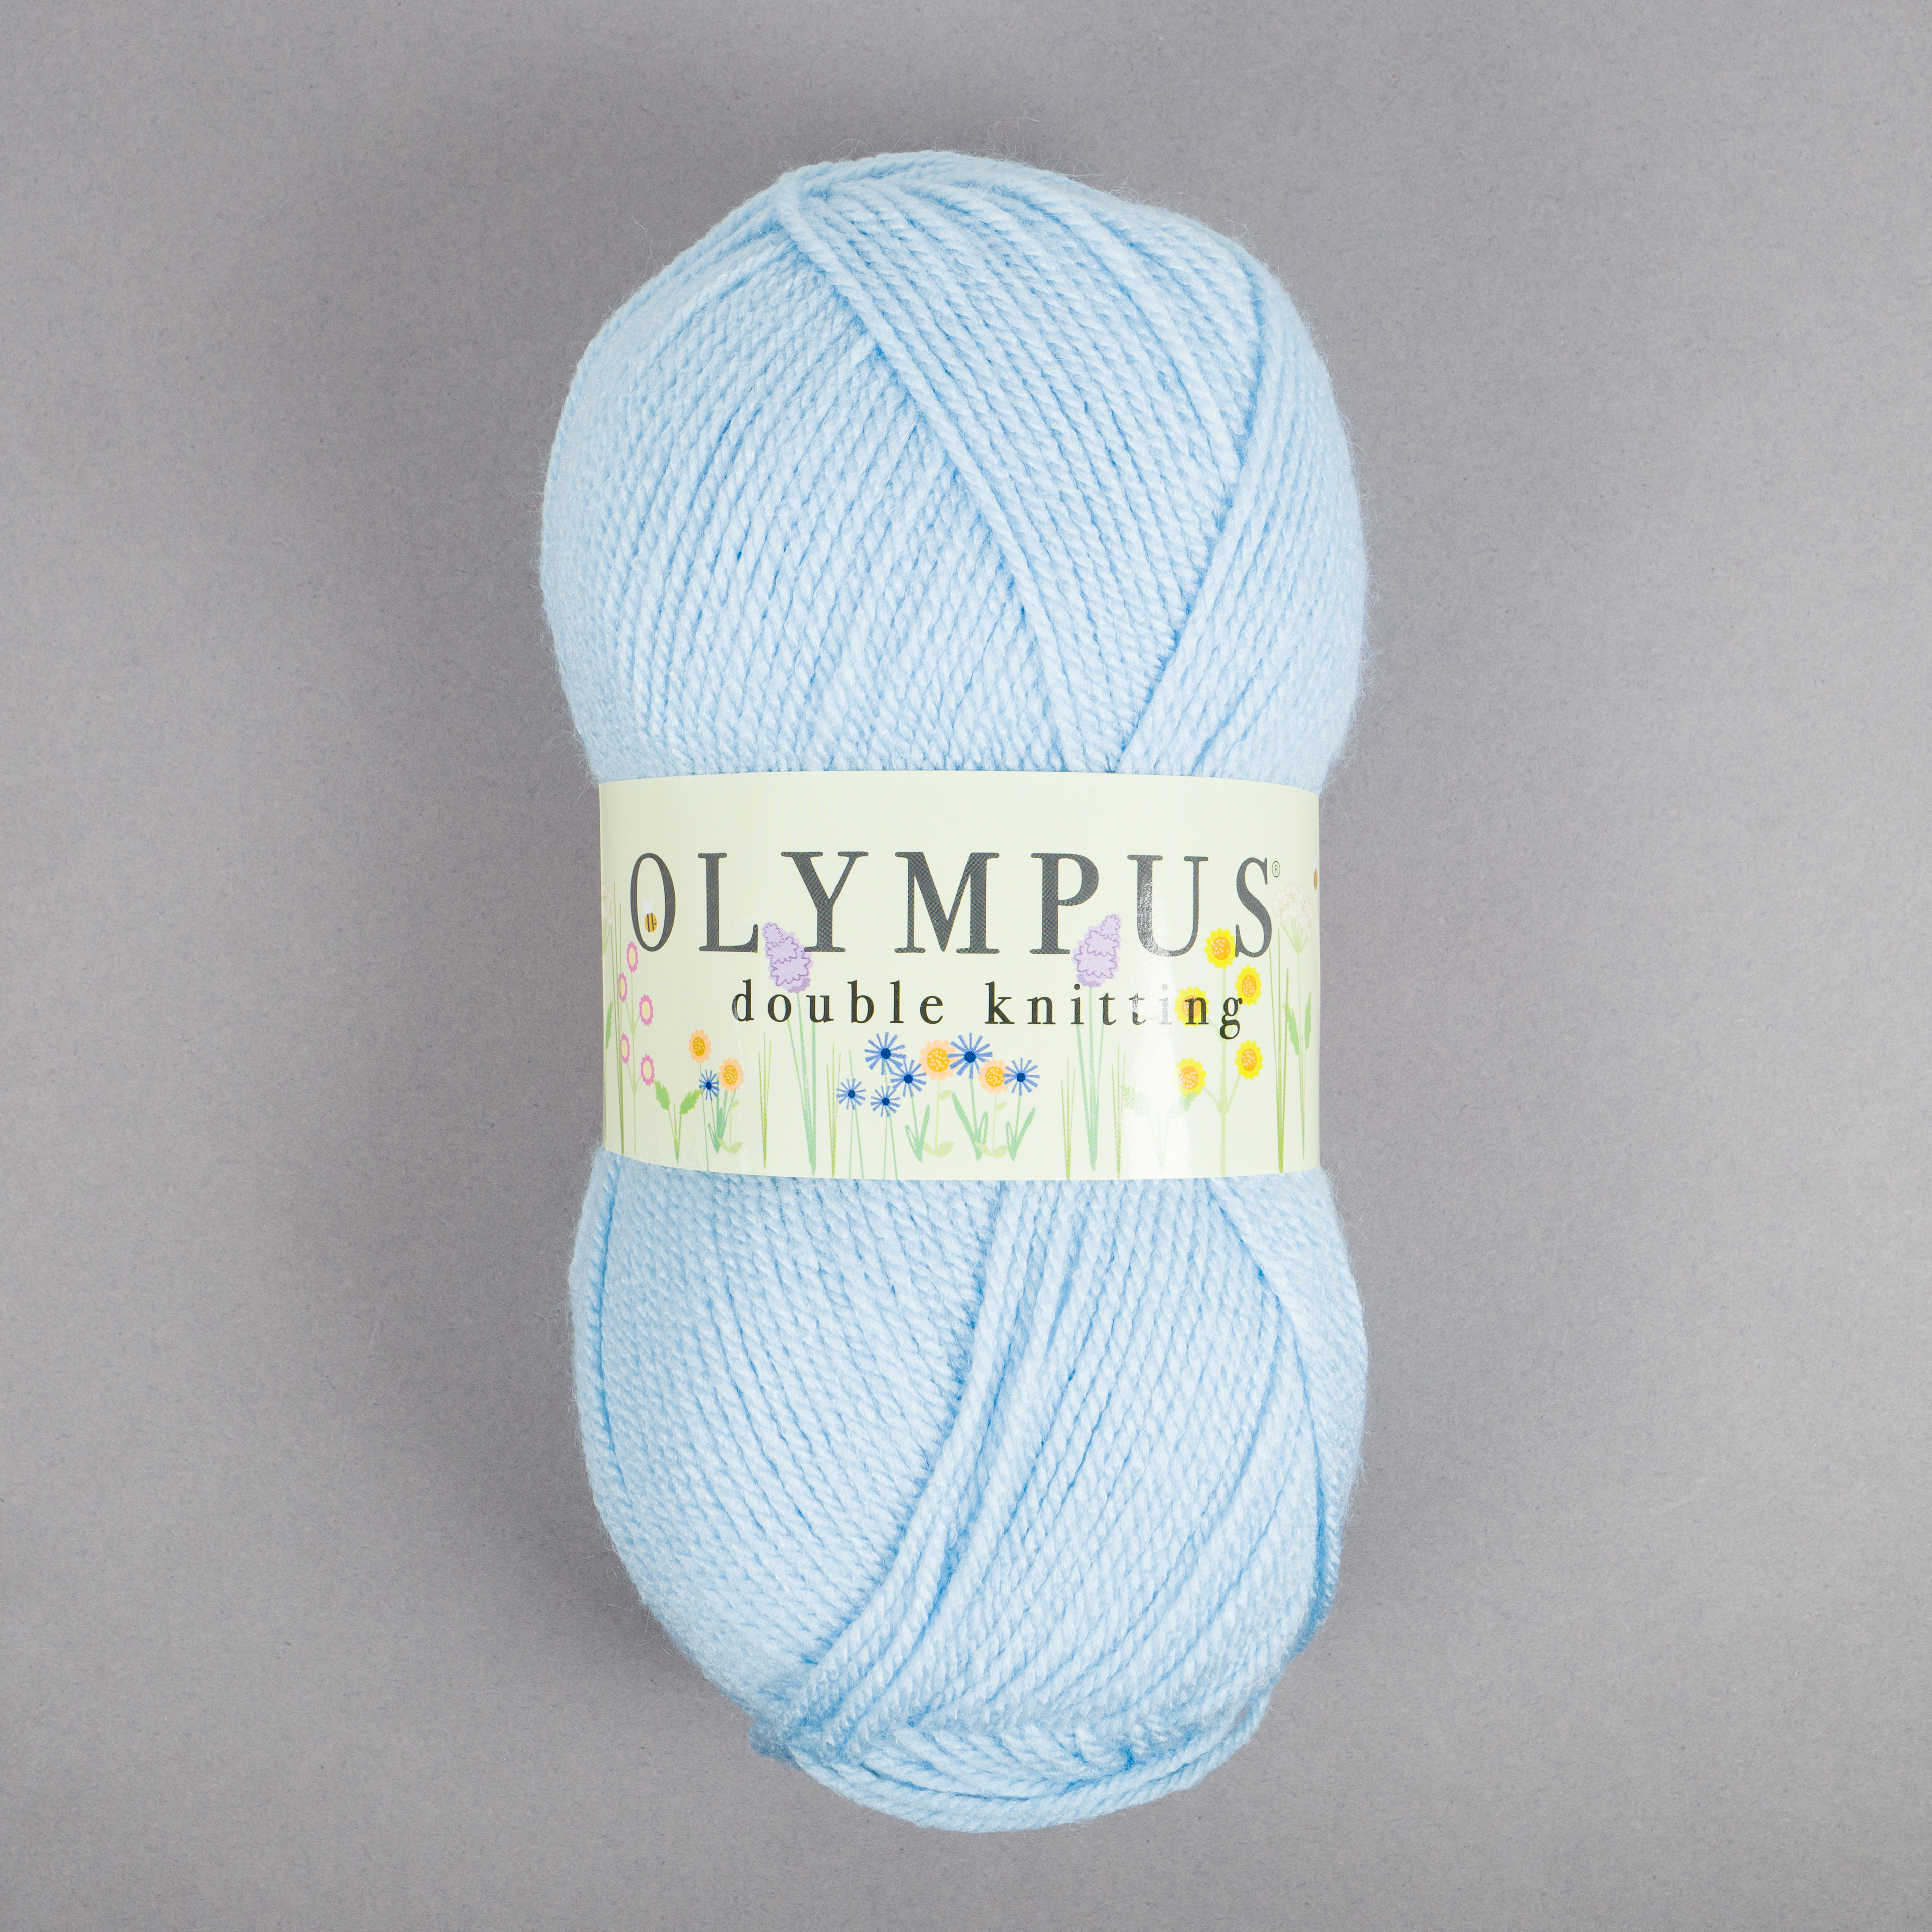 OLYMPUS DK 10X100G 908 Pale Blue